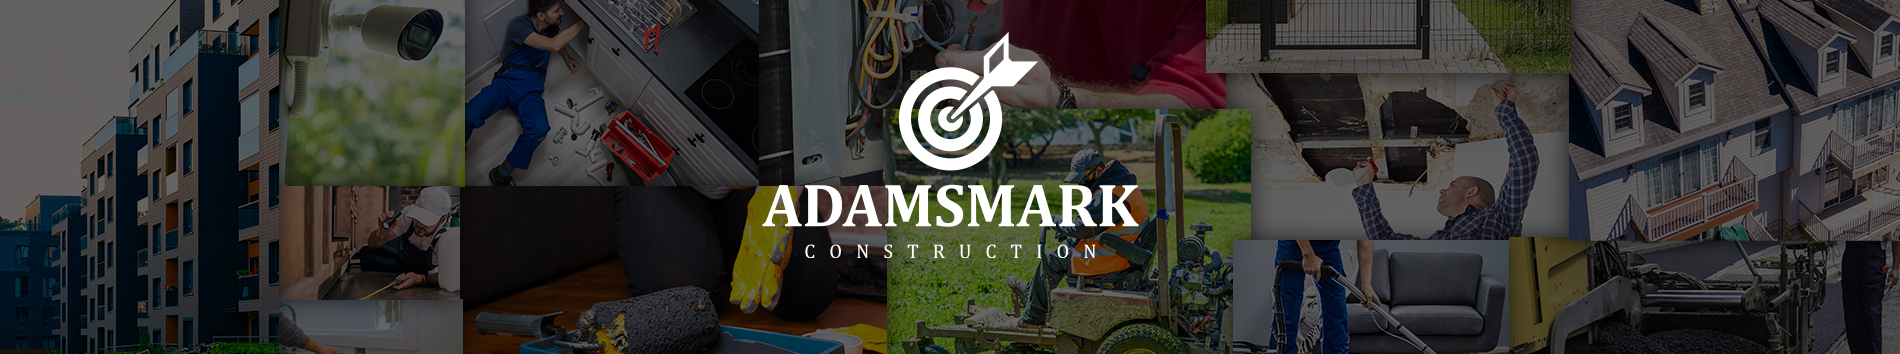 Adamsmark Construction, LLC